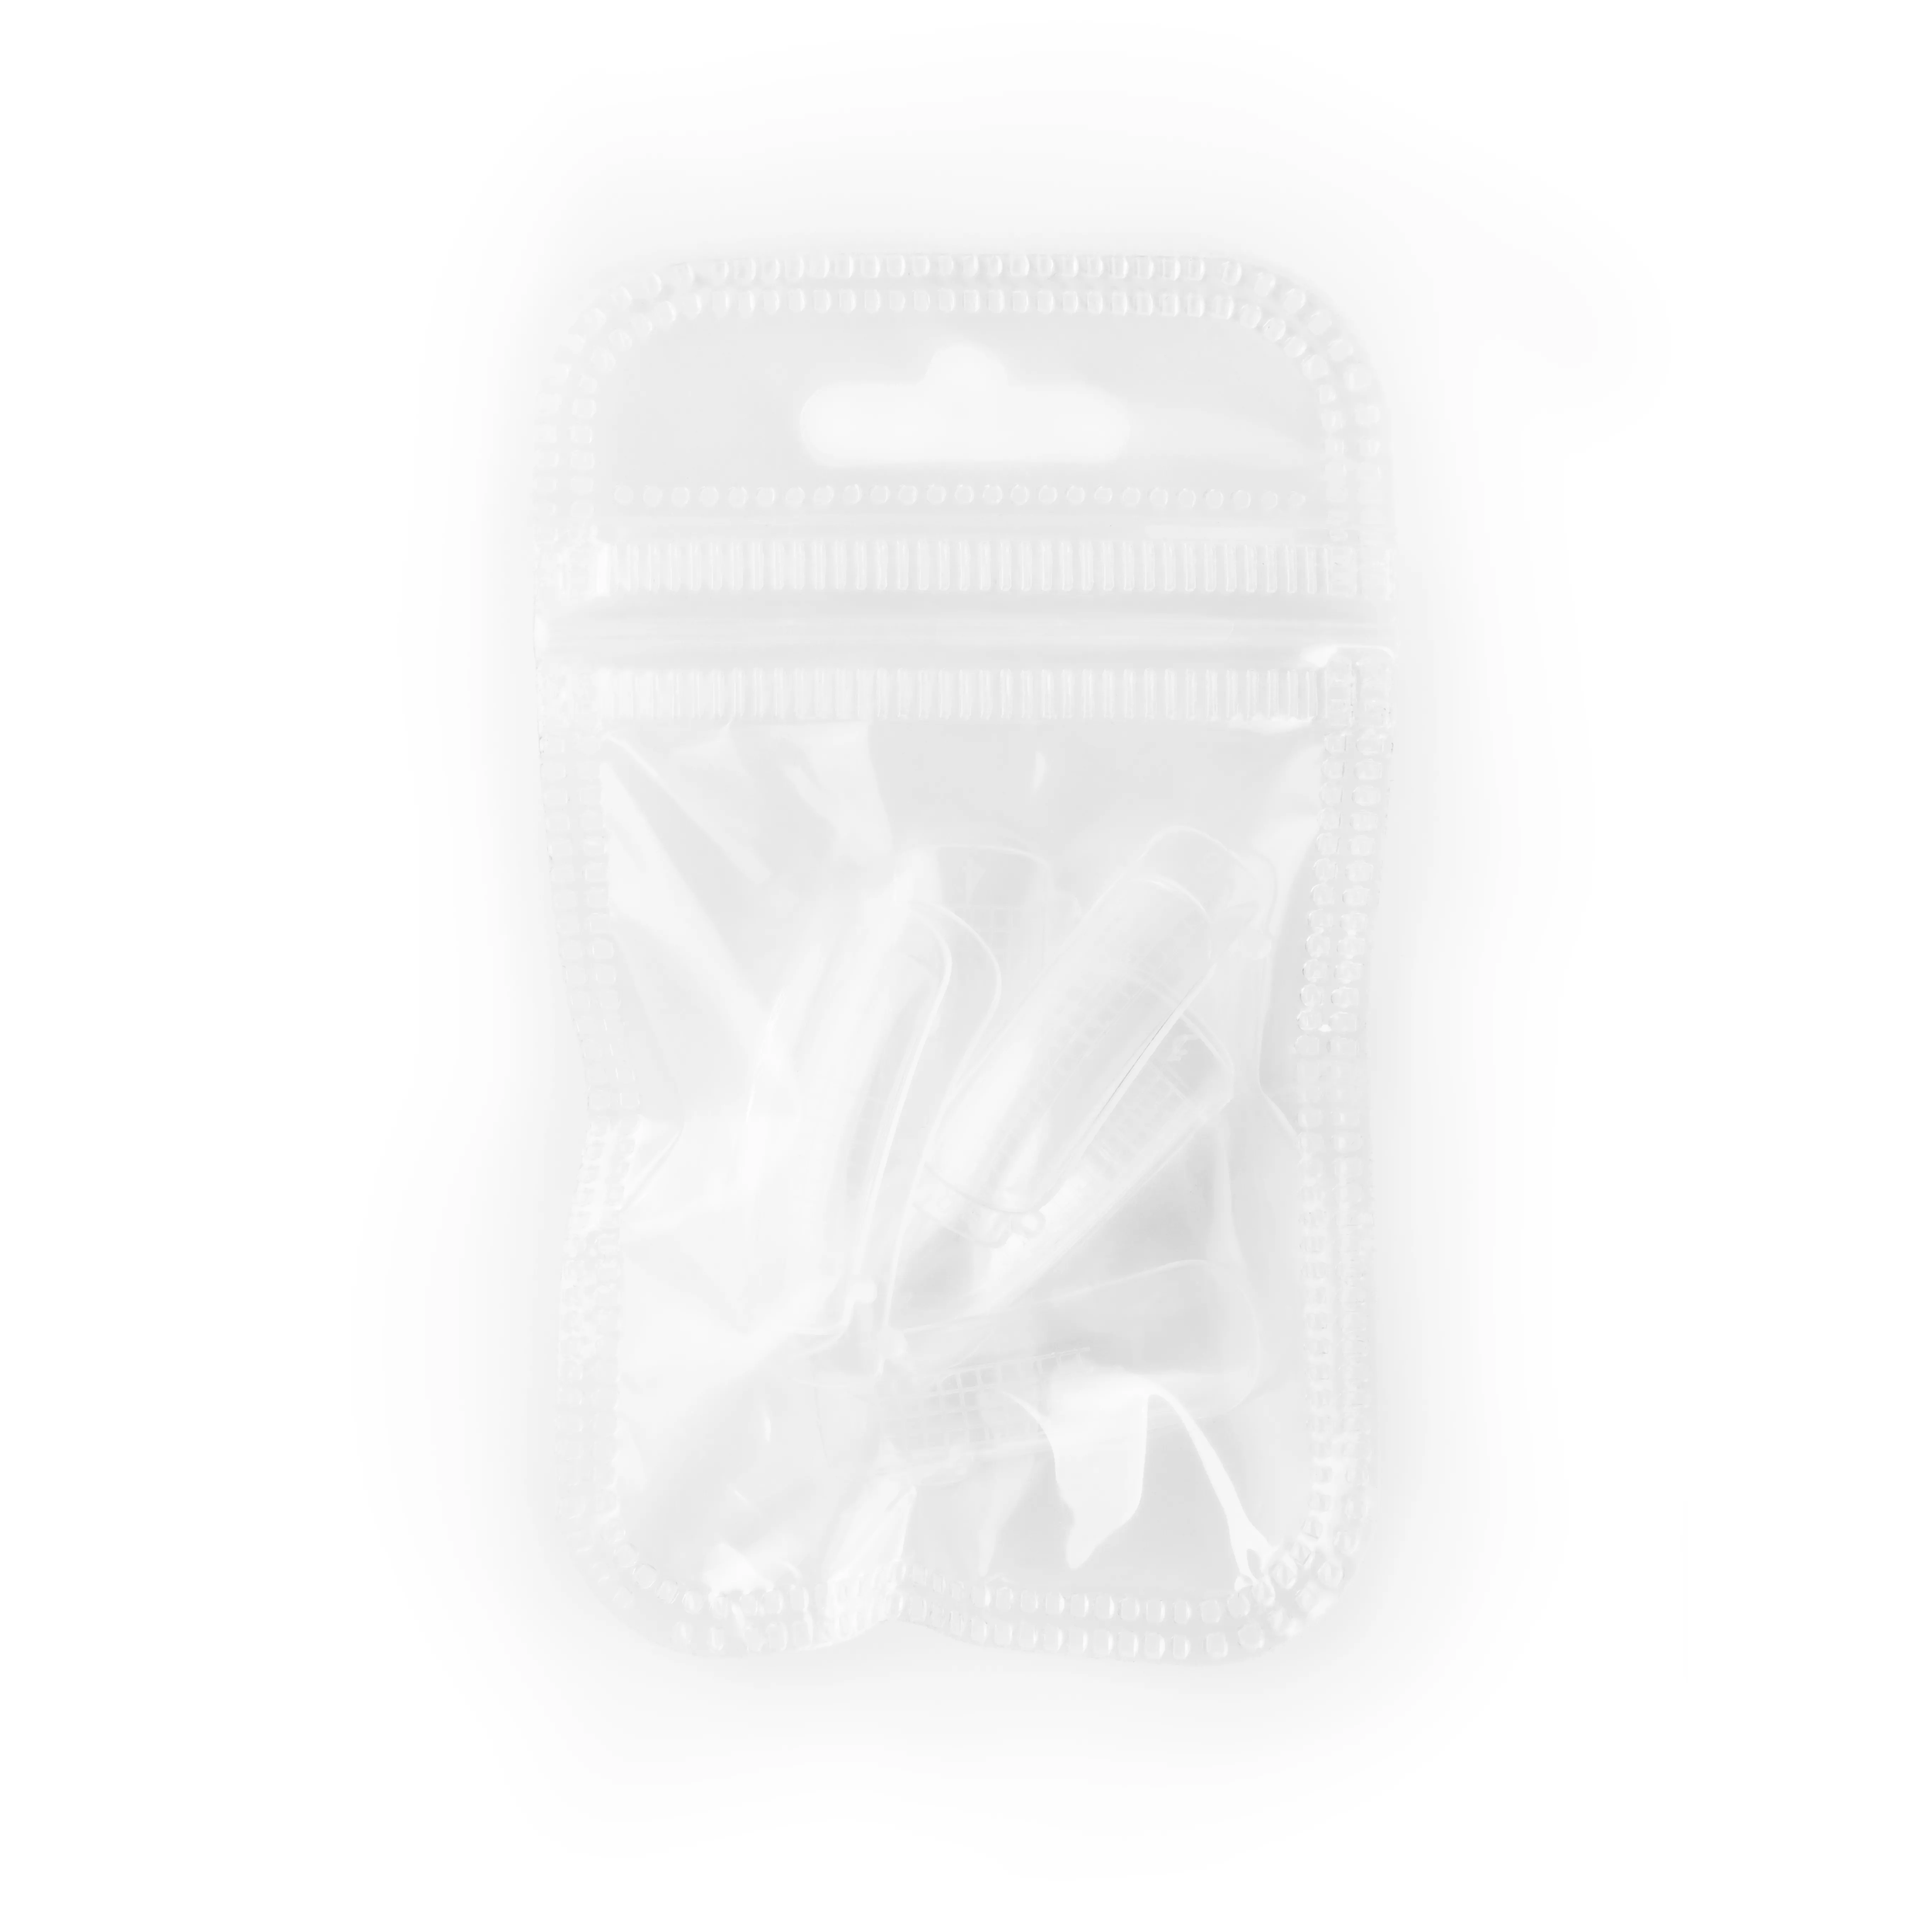 Верхняя форма MONAMI для наращивания ногтей (пакет) (10шт)